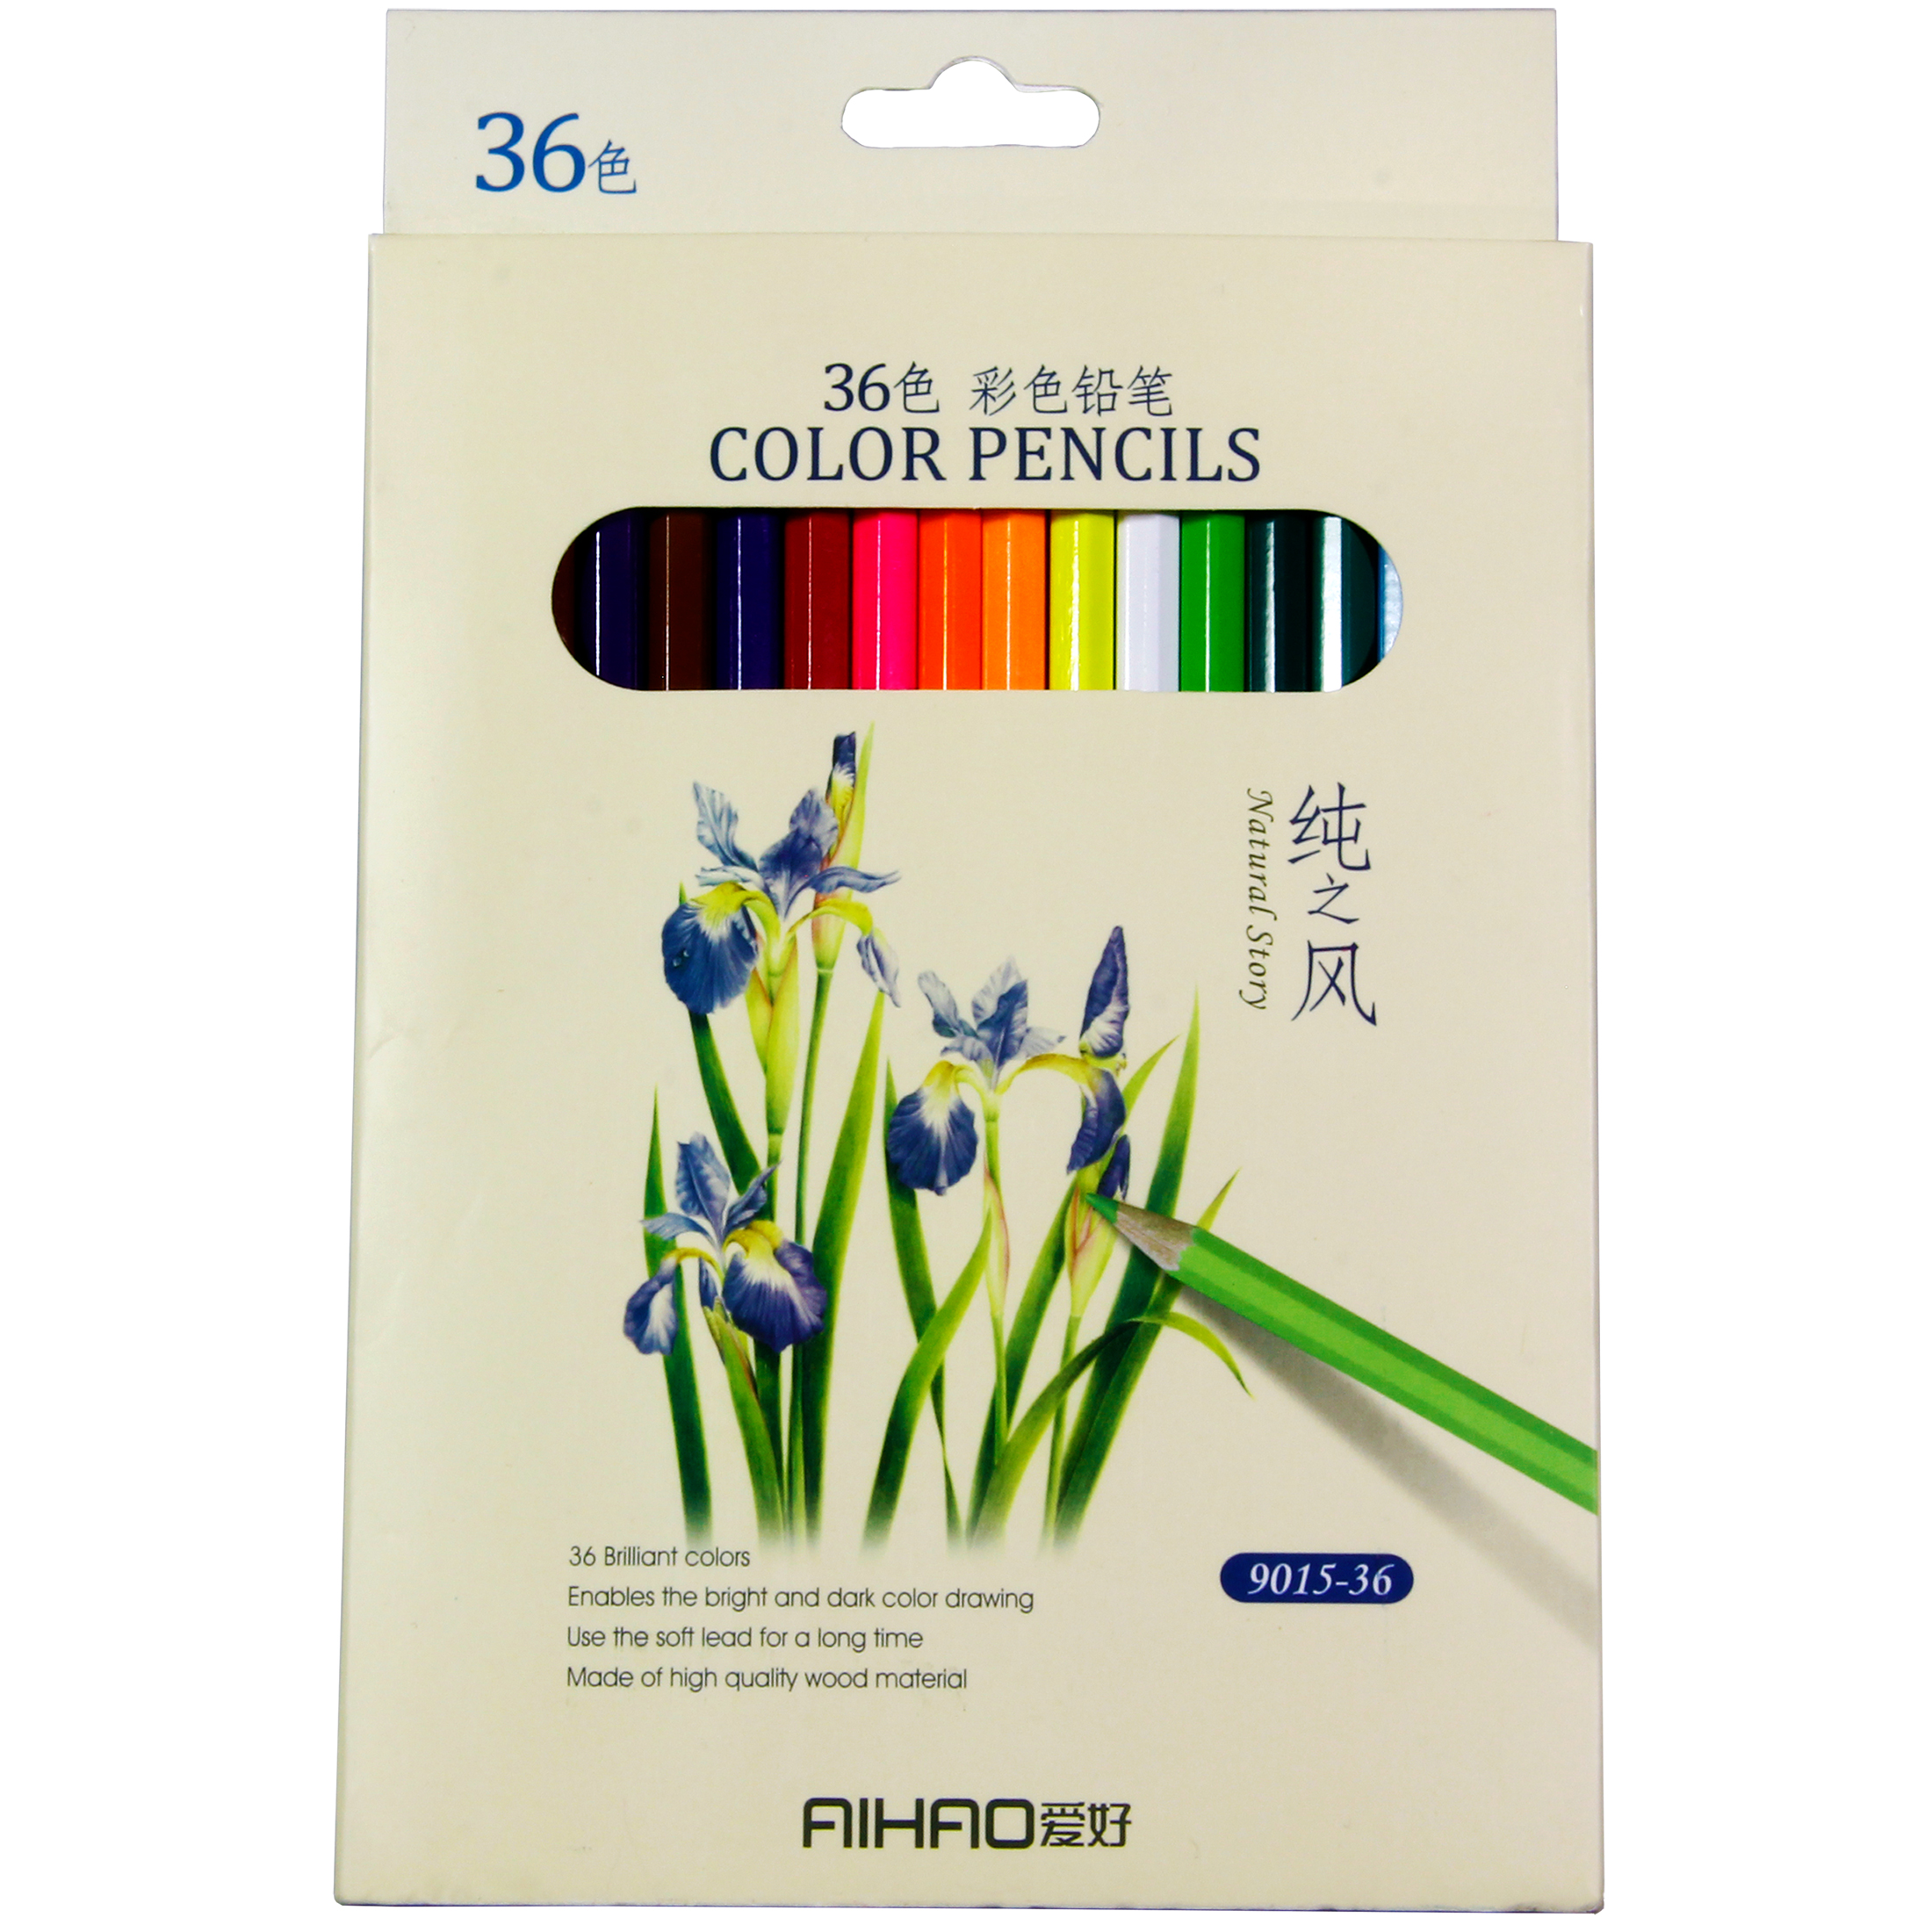 مداد رنگی 36 رنگ آیهایو کد 9015-36